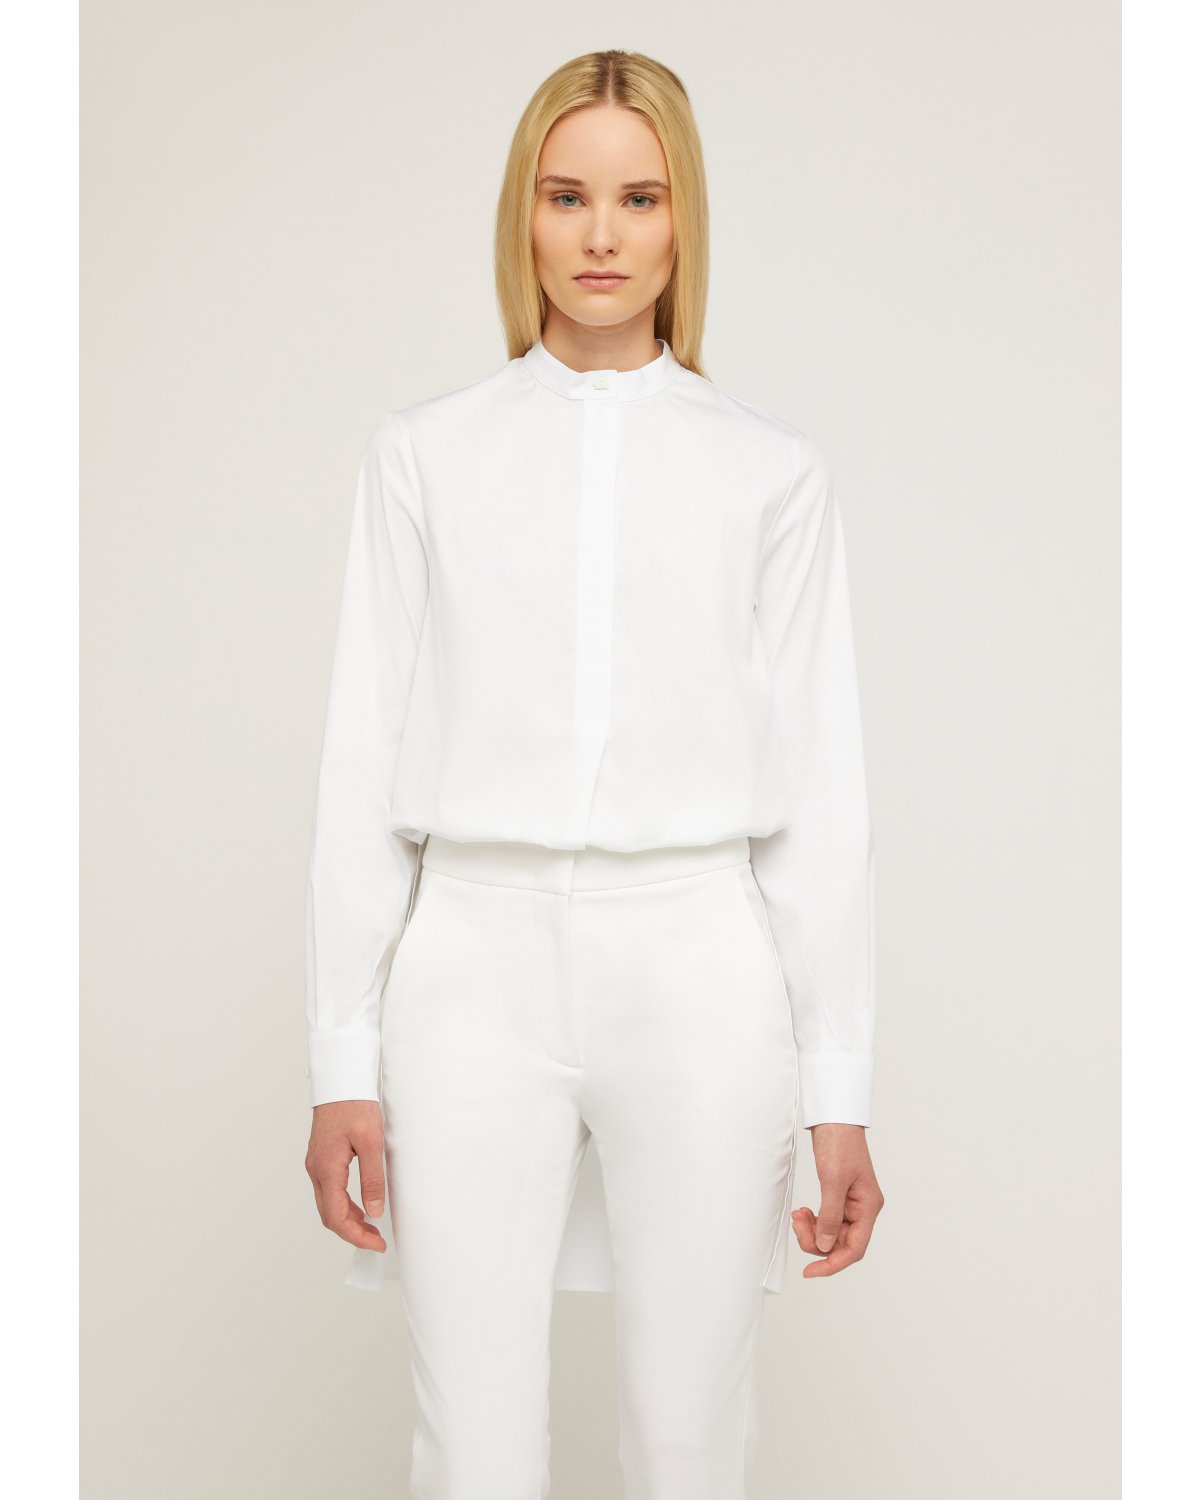 Mandarin collar white shirt | 73_74 | Genny